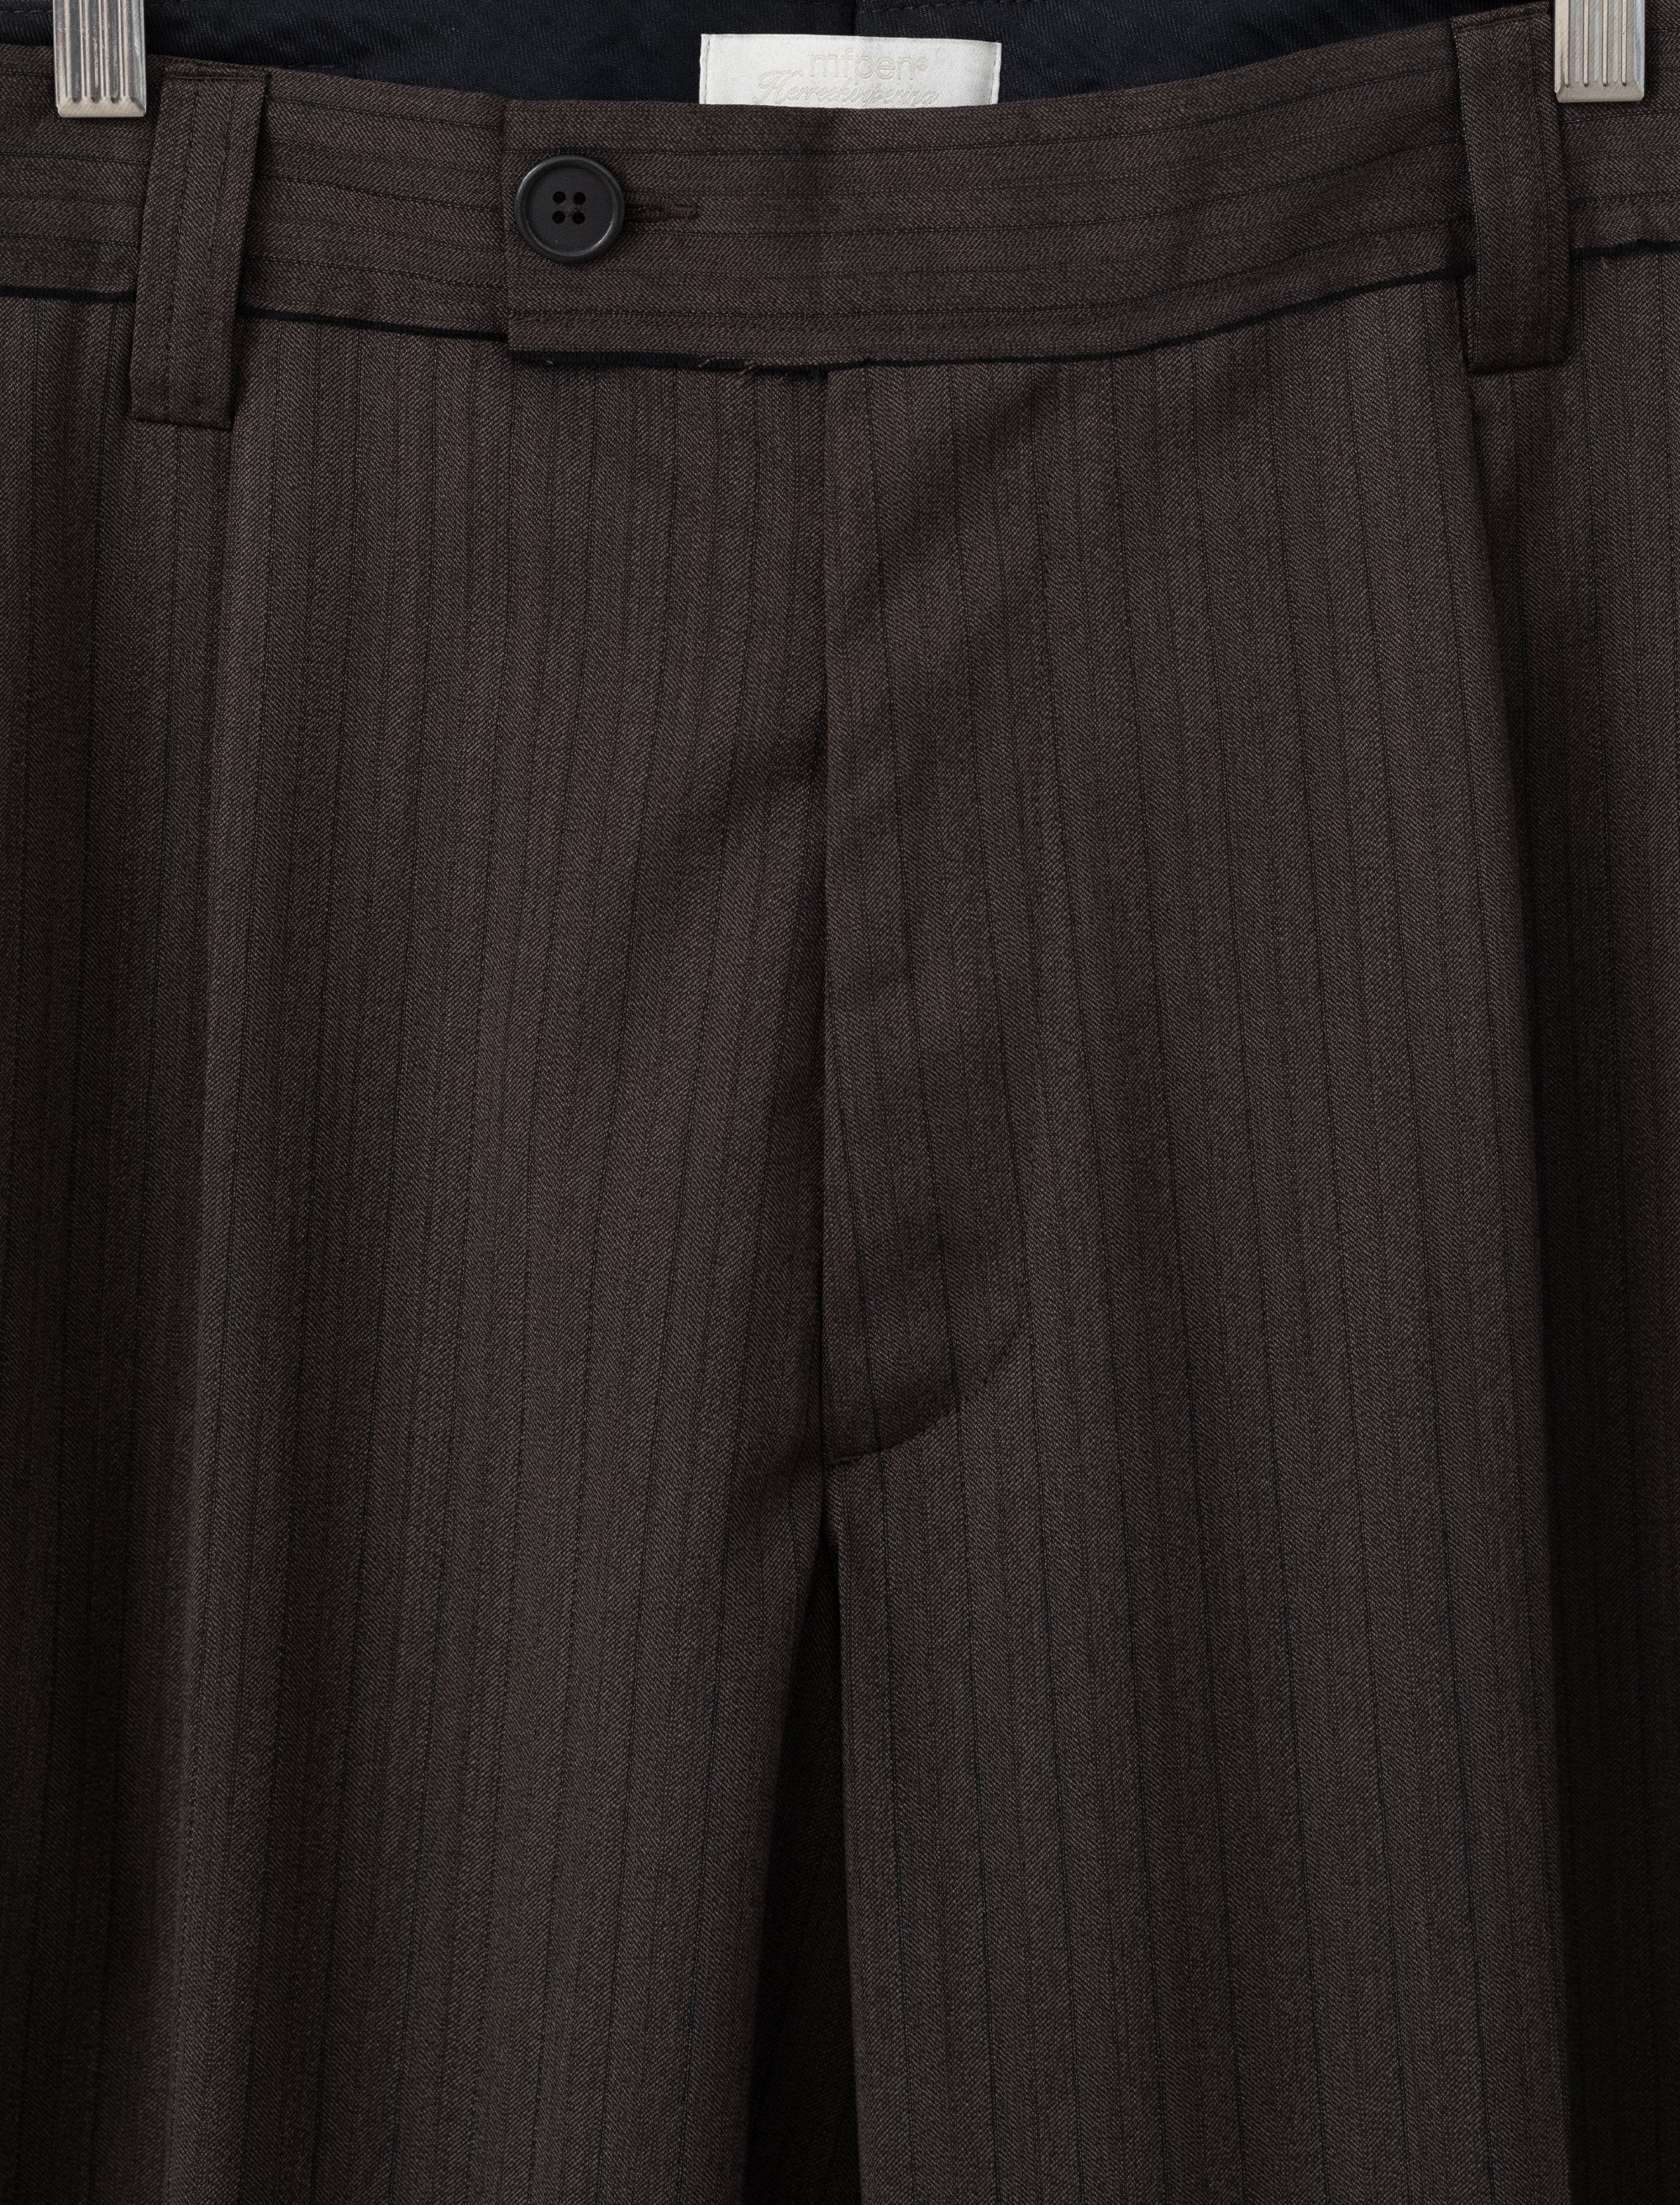 Patch Trouser (Vintage Pinstripe)